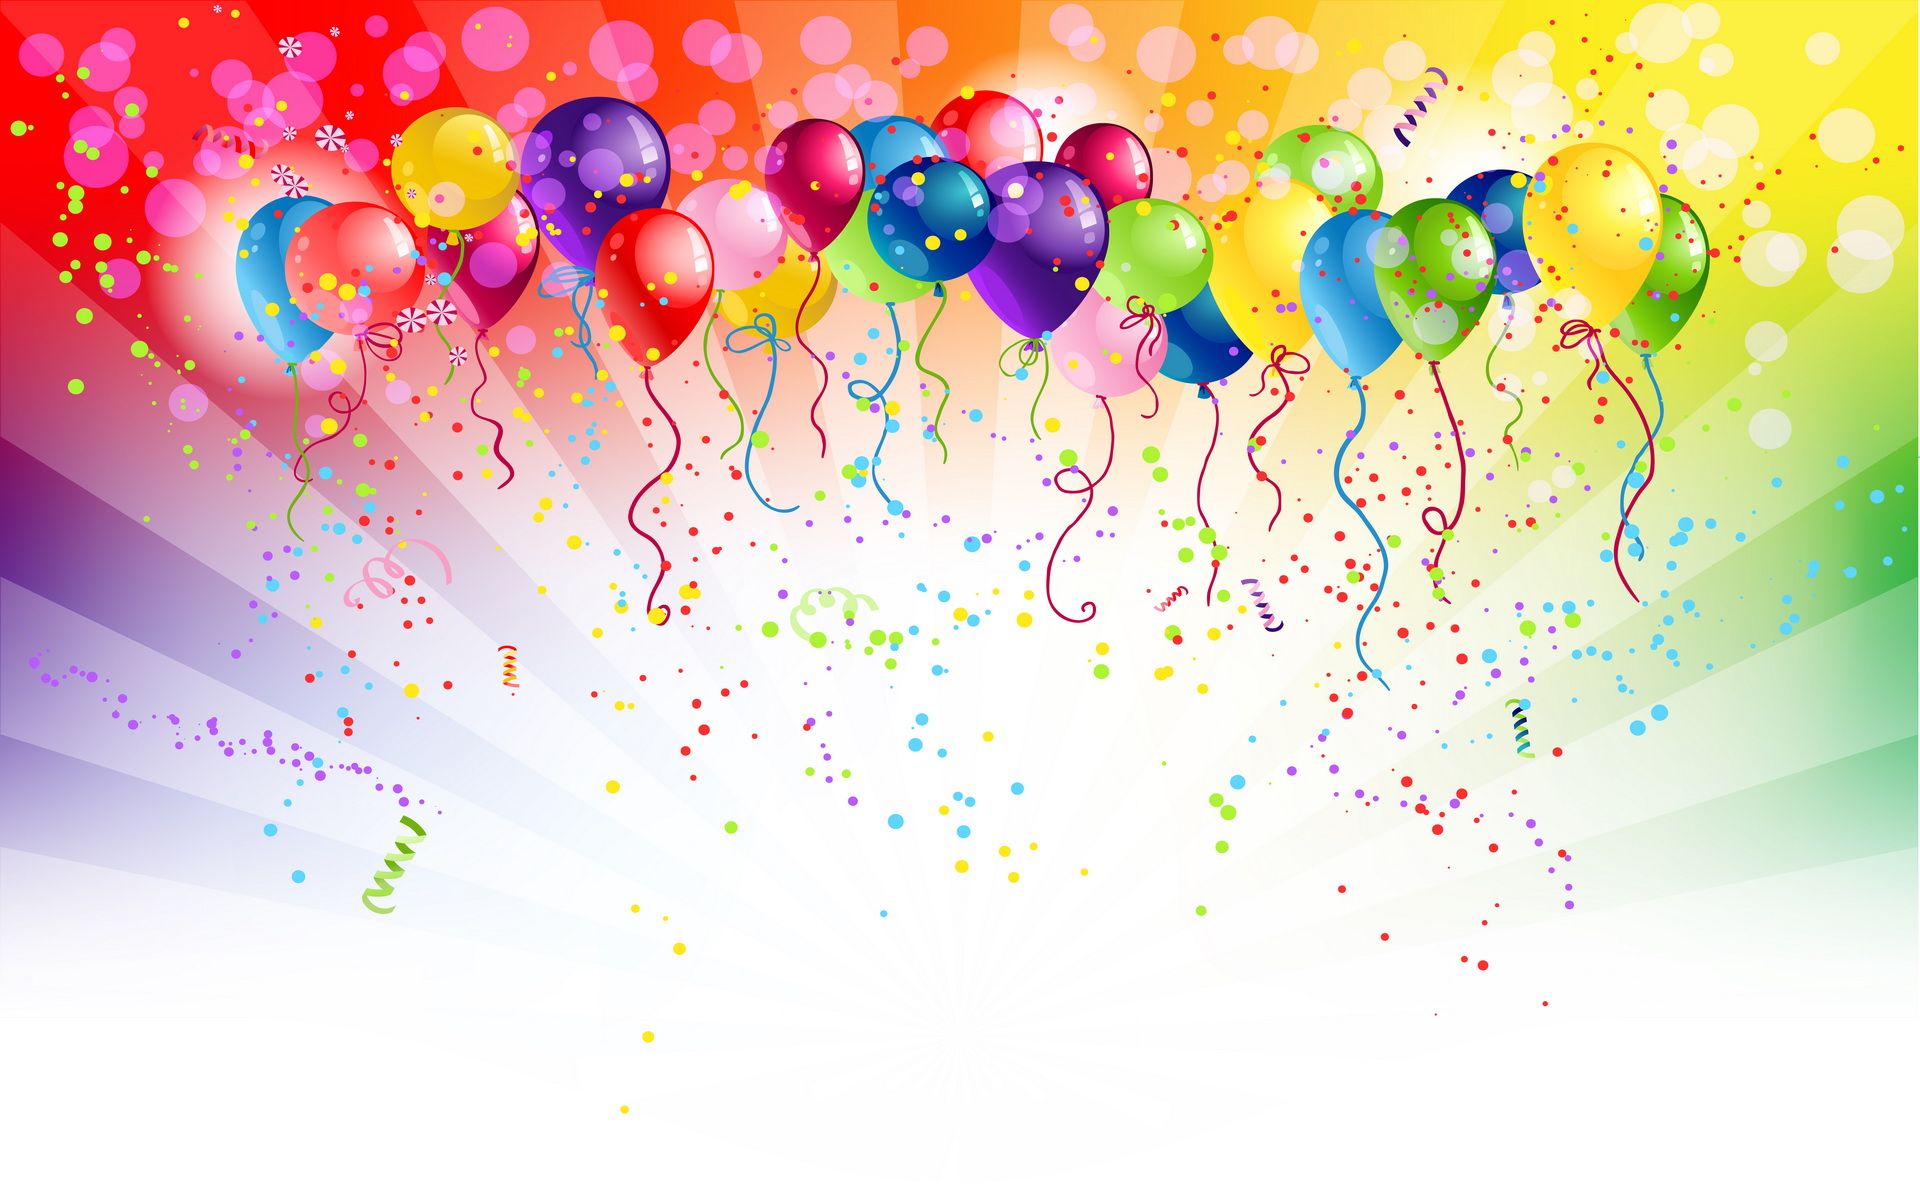 Kanchana Anandhan On Happy BirtHDay Balloons